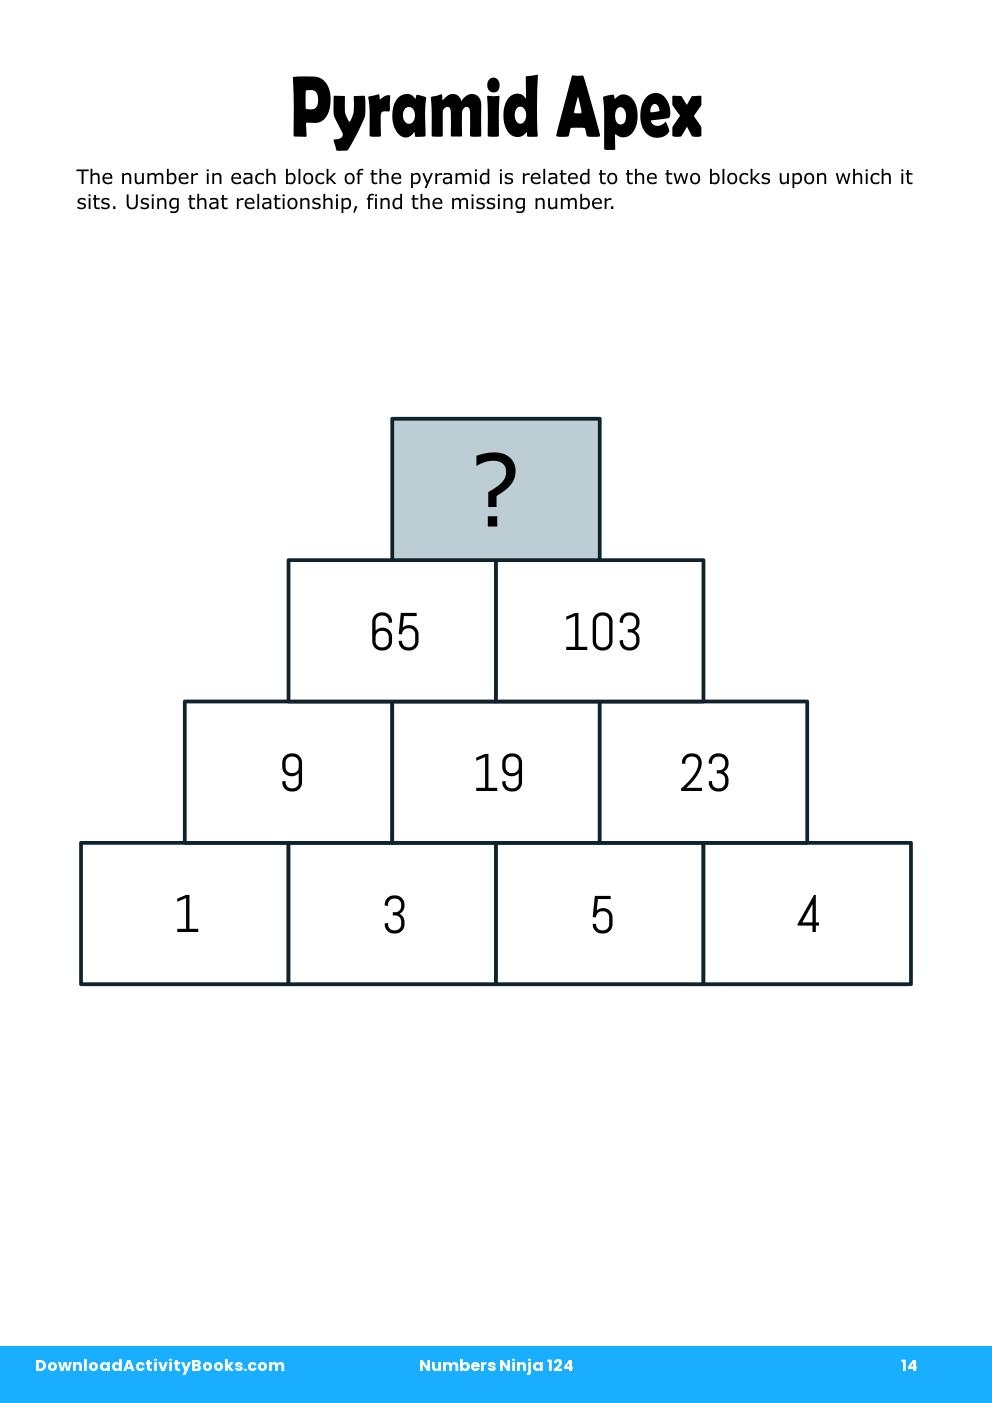 Pyramid Apex in Numbers Ninja 124